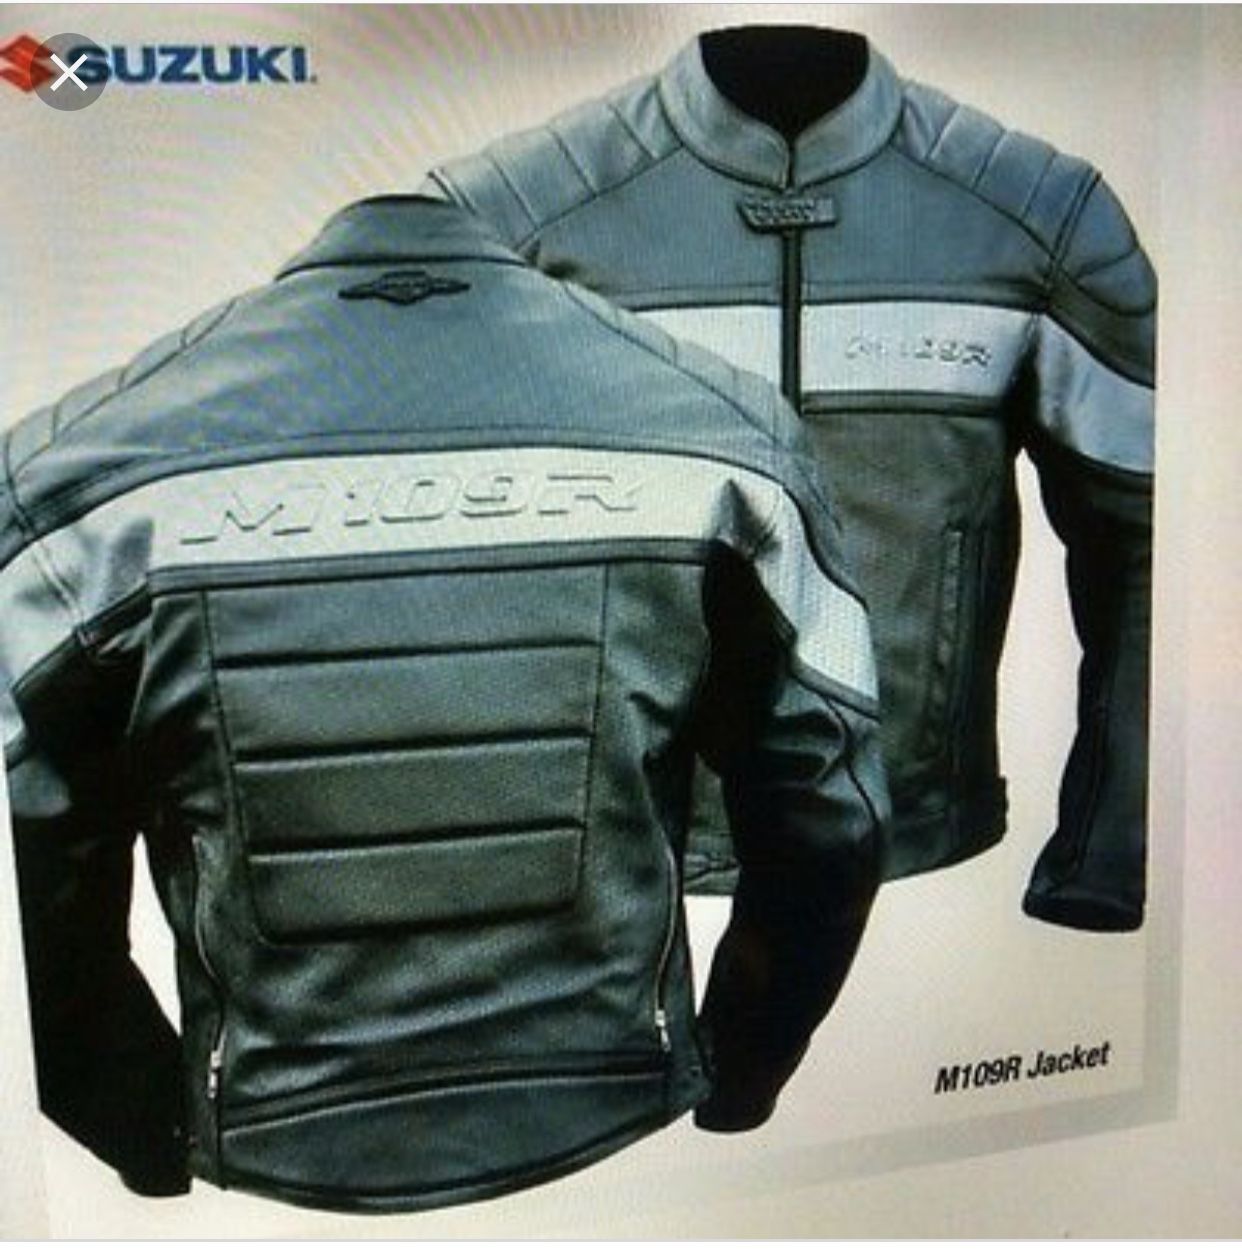 SUZUKI BOULEVARD Leather Motorcycle Jacket Limited Edition M109R